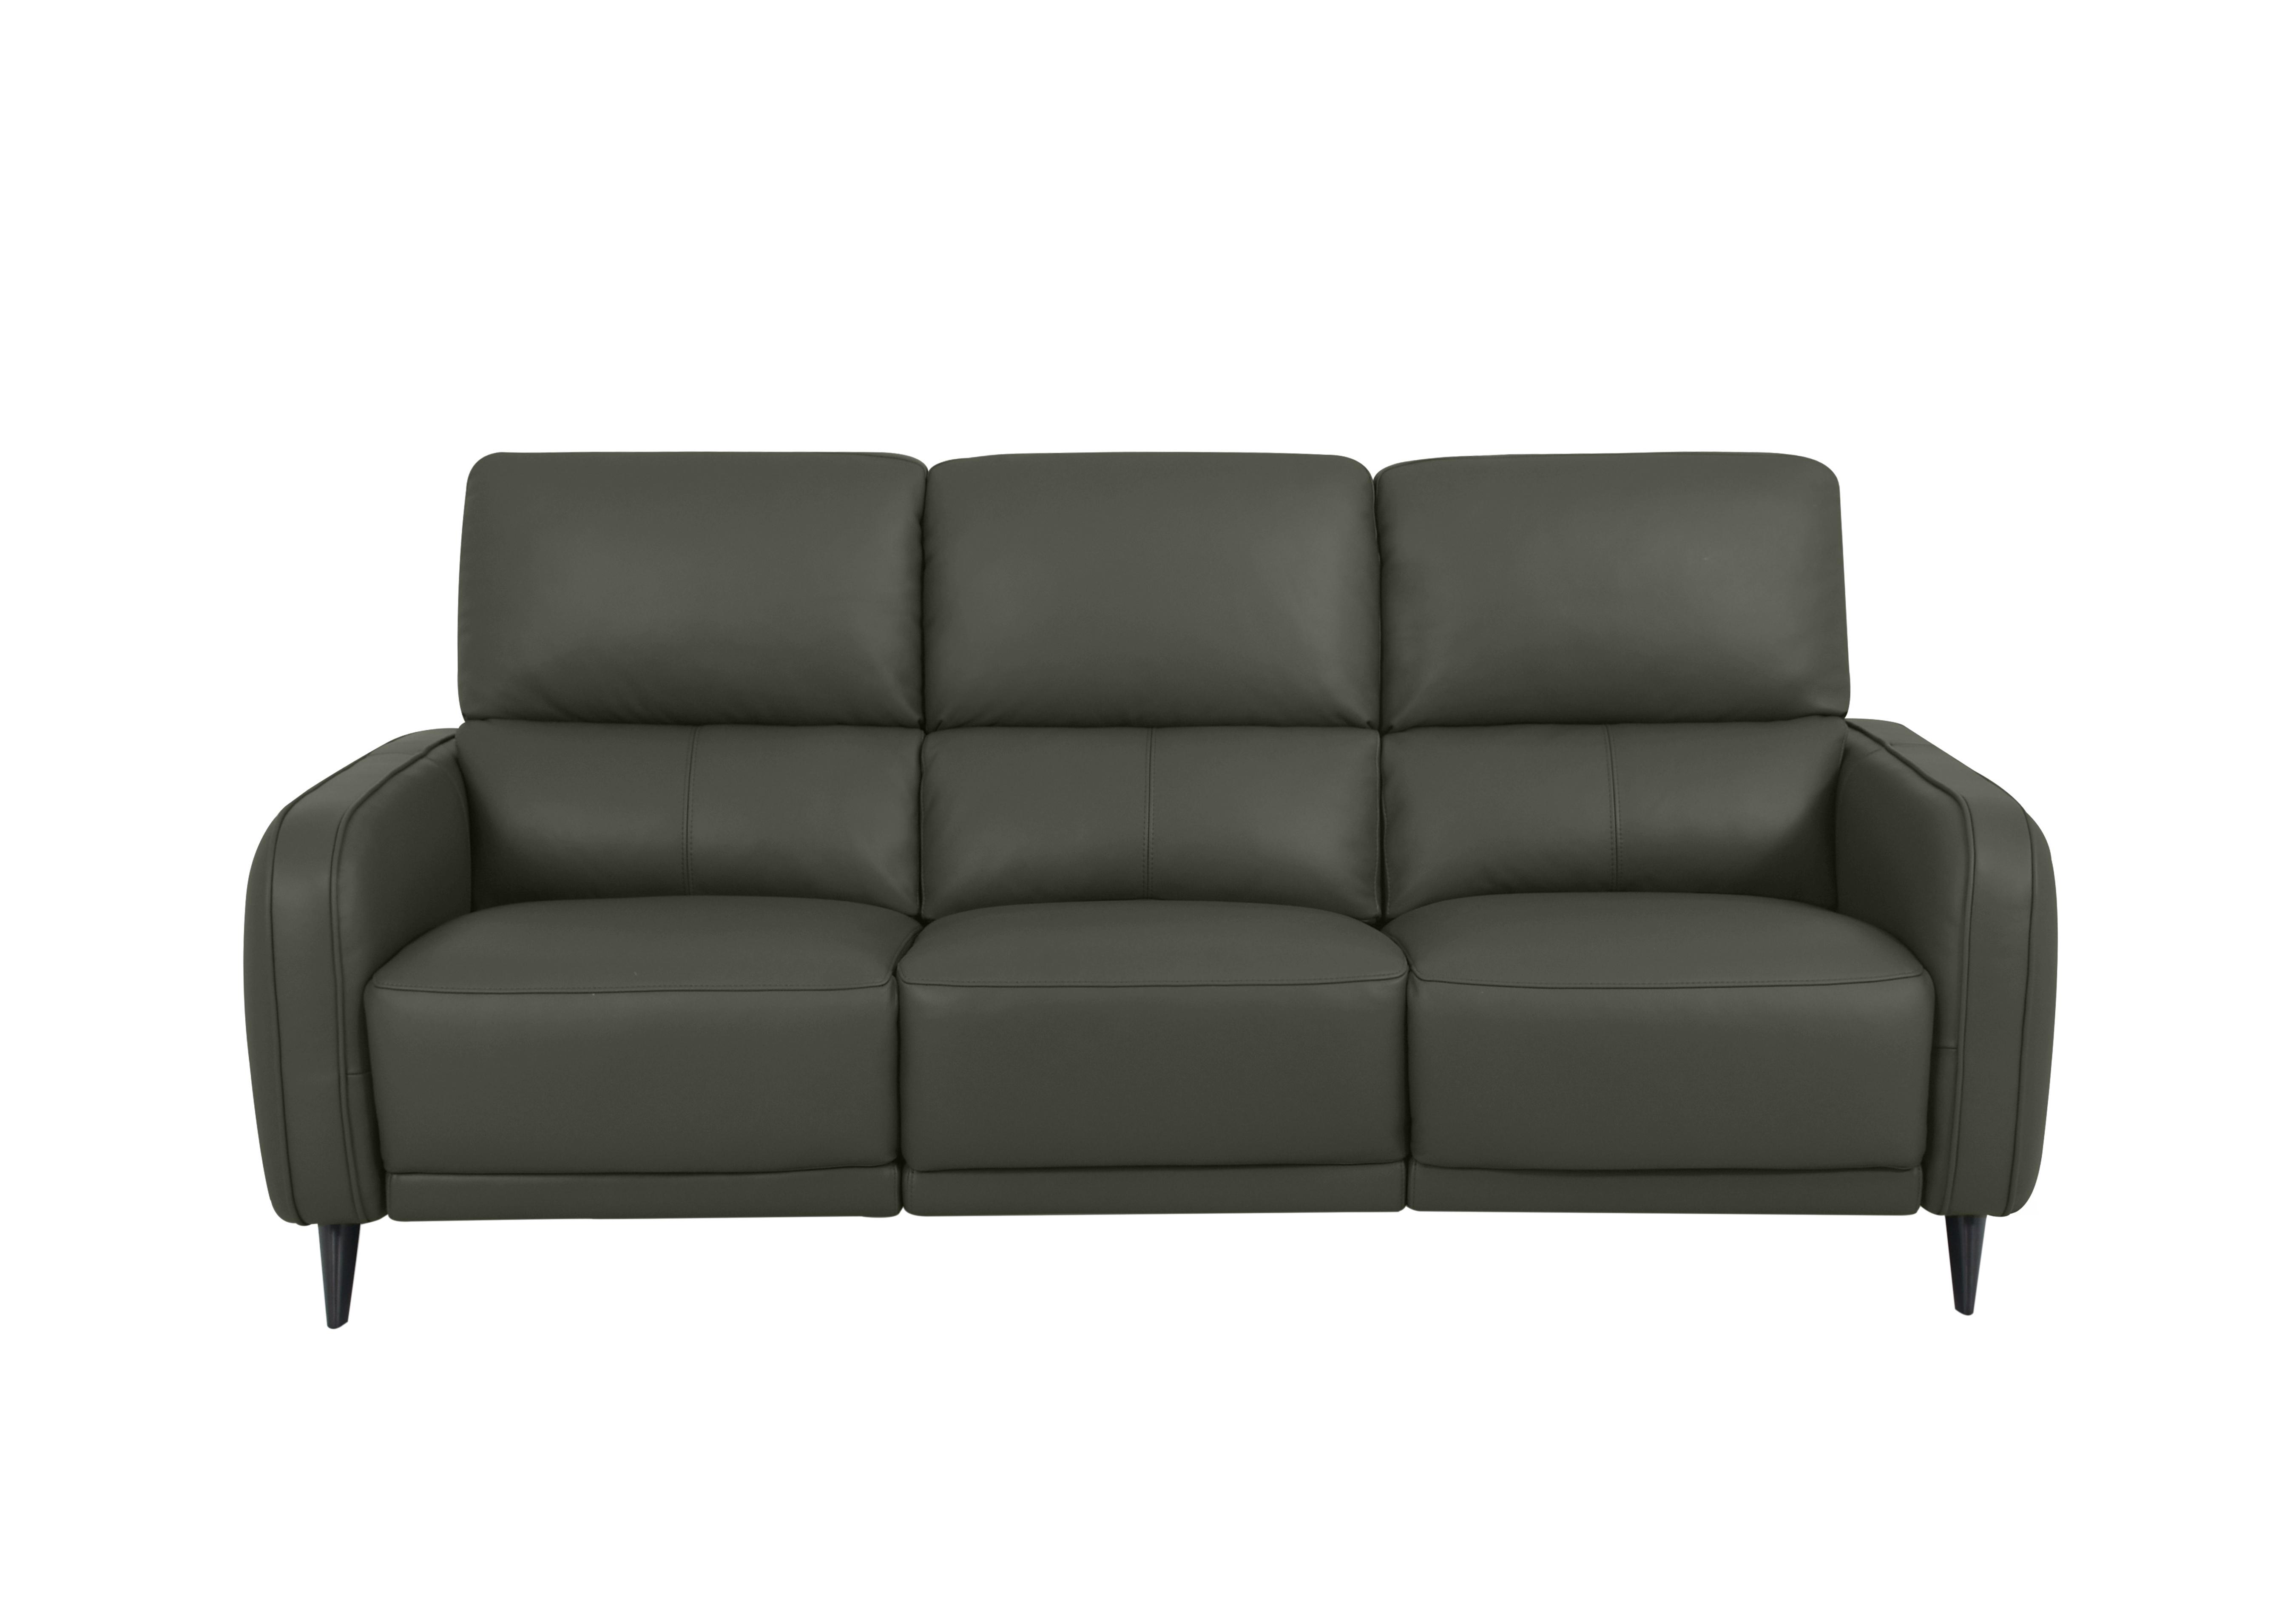 Logan 3 Seater Leather Sofa in Np-548e Dark Olive on Furniture Village